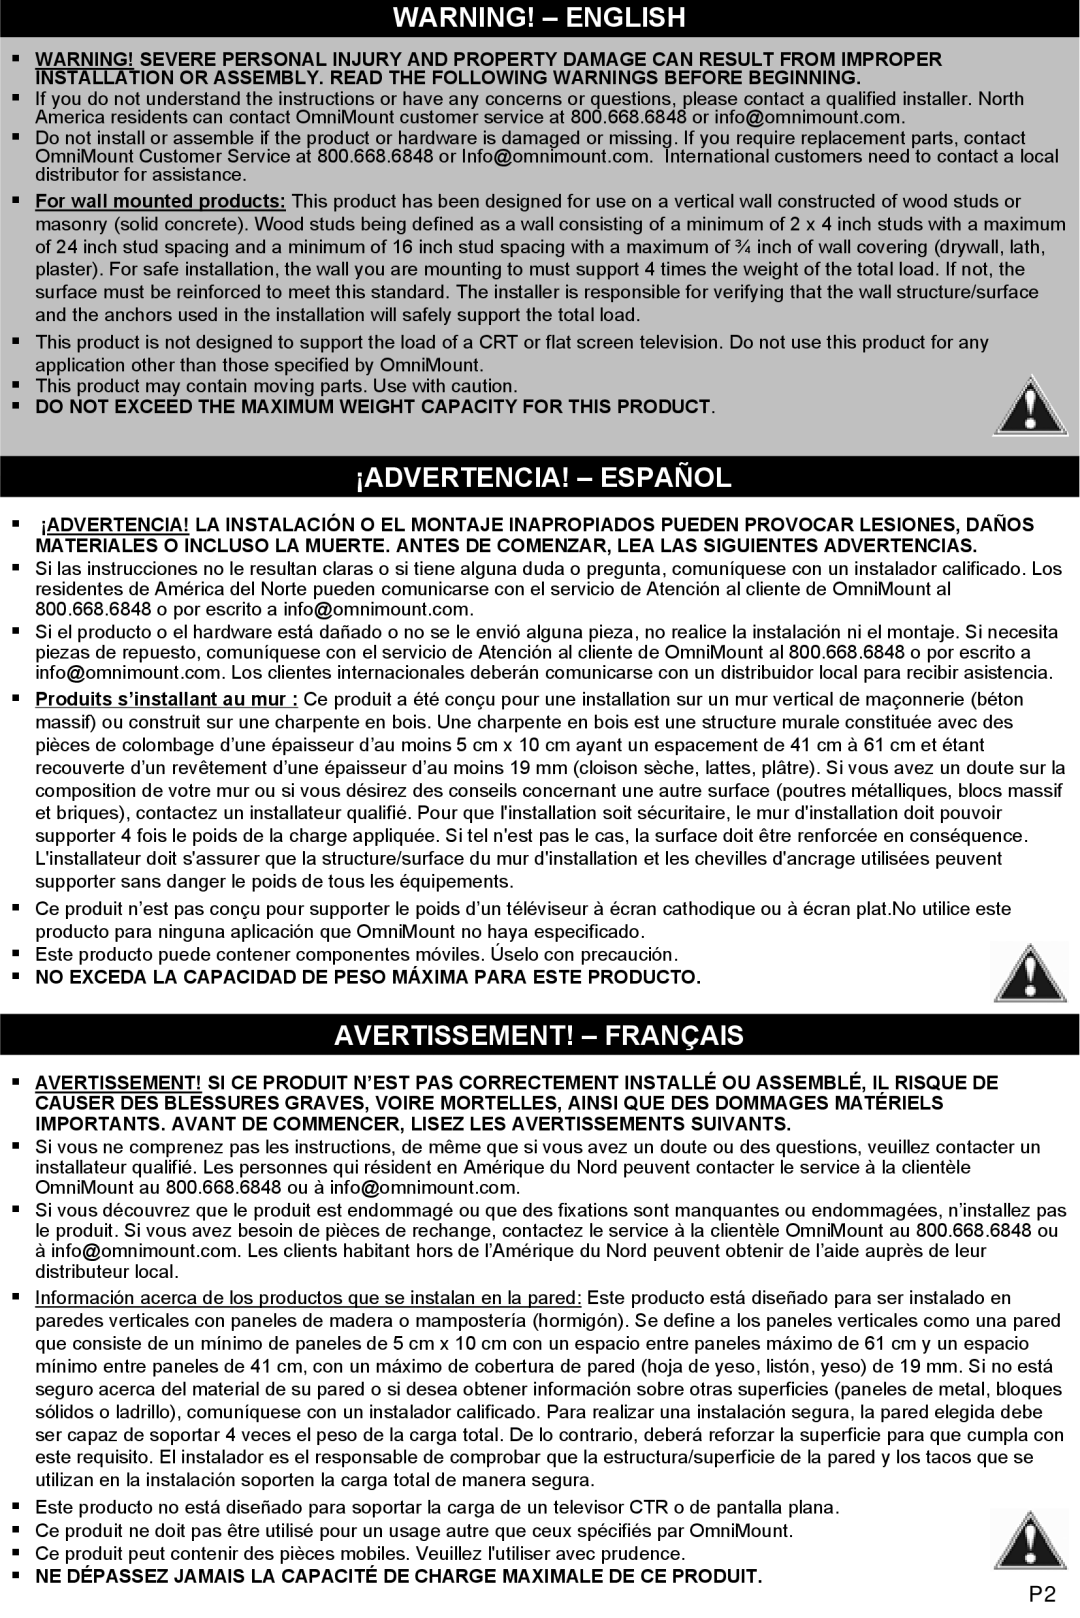 Omnimount Tria 2 instruction manual Warning! - English, ¡Advertencia! - Español, Avertissement! - Français 